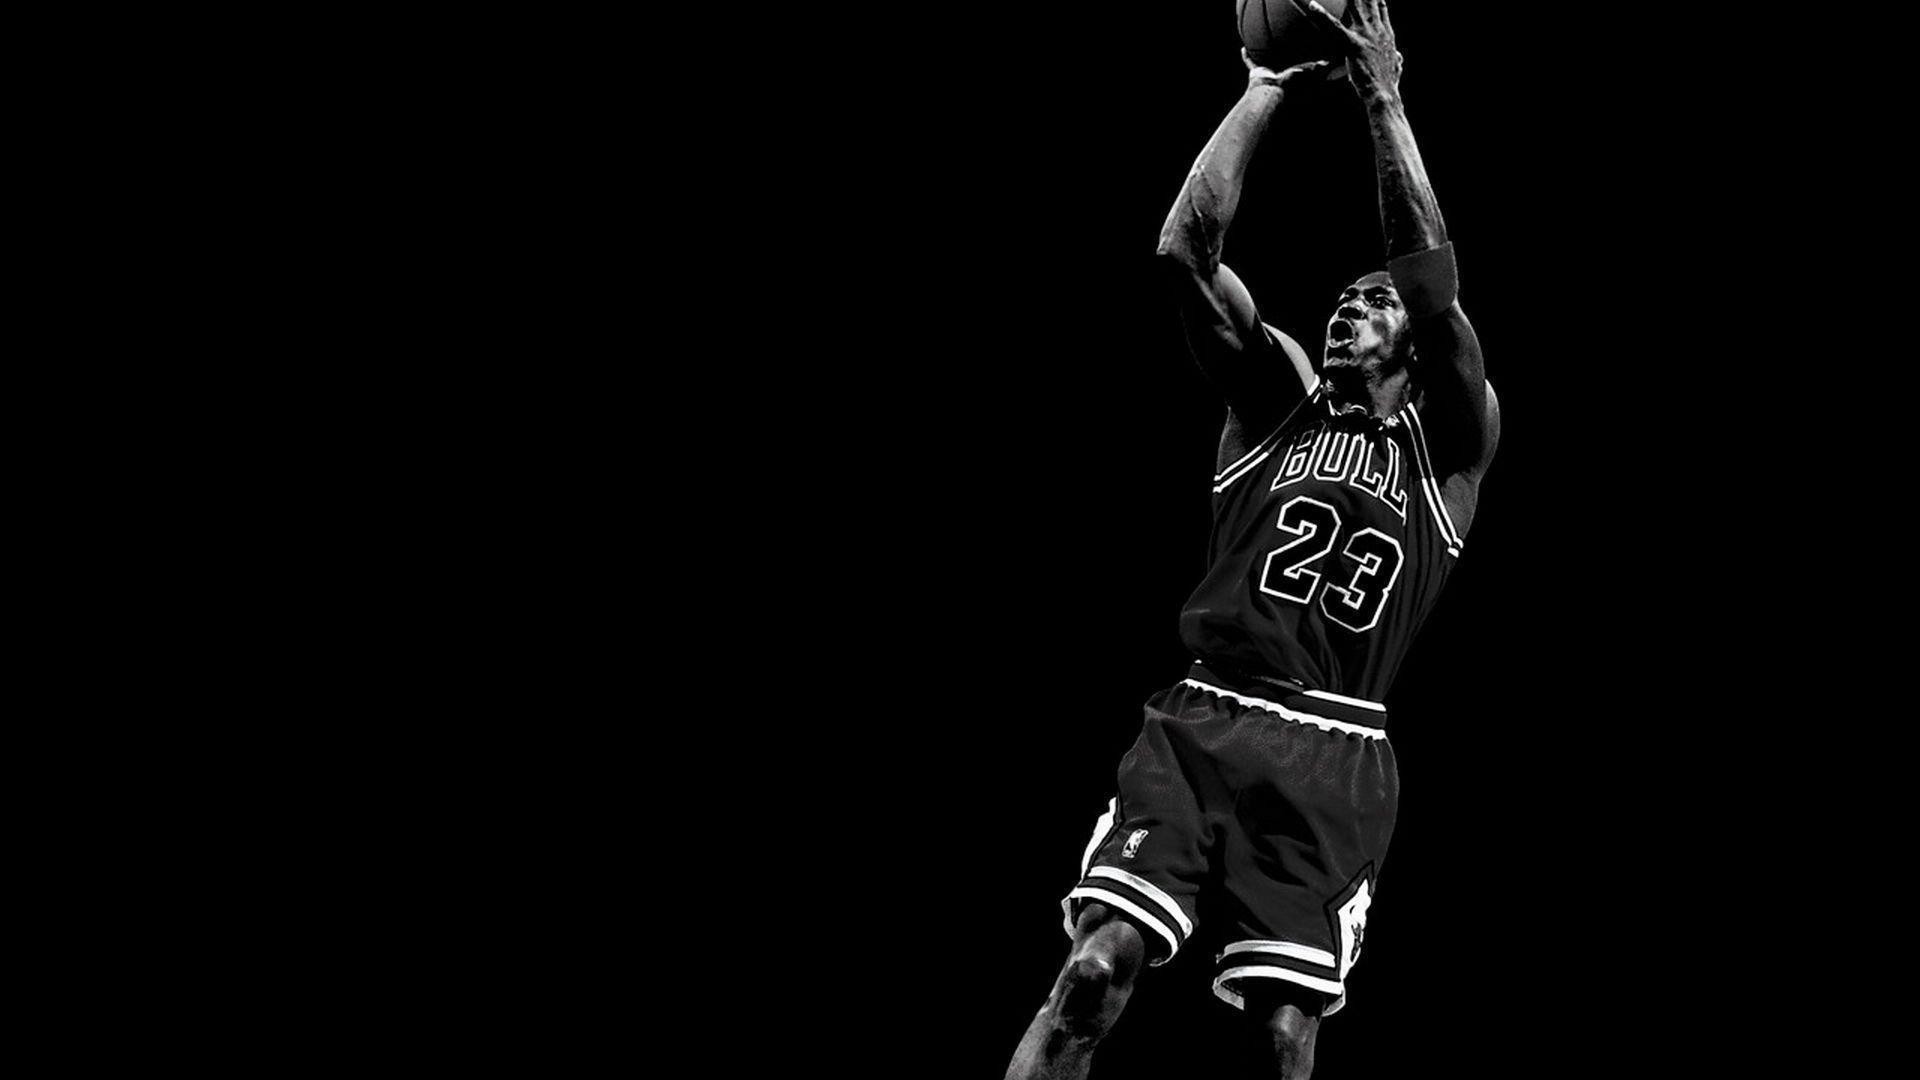 1920x1080 Fonds d'Ã©cran Michael Jordan : tous les wallpapers Michael Jordan